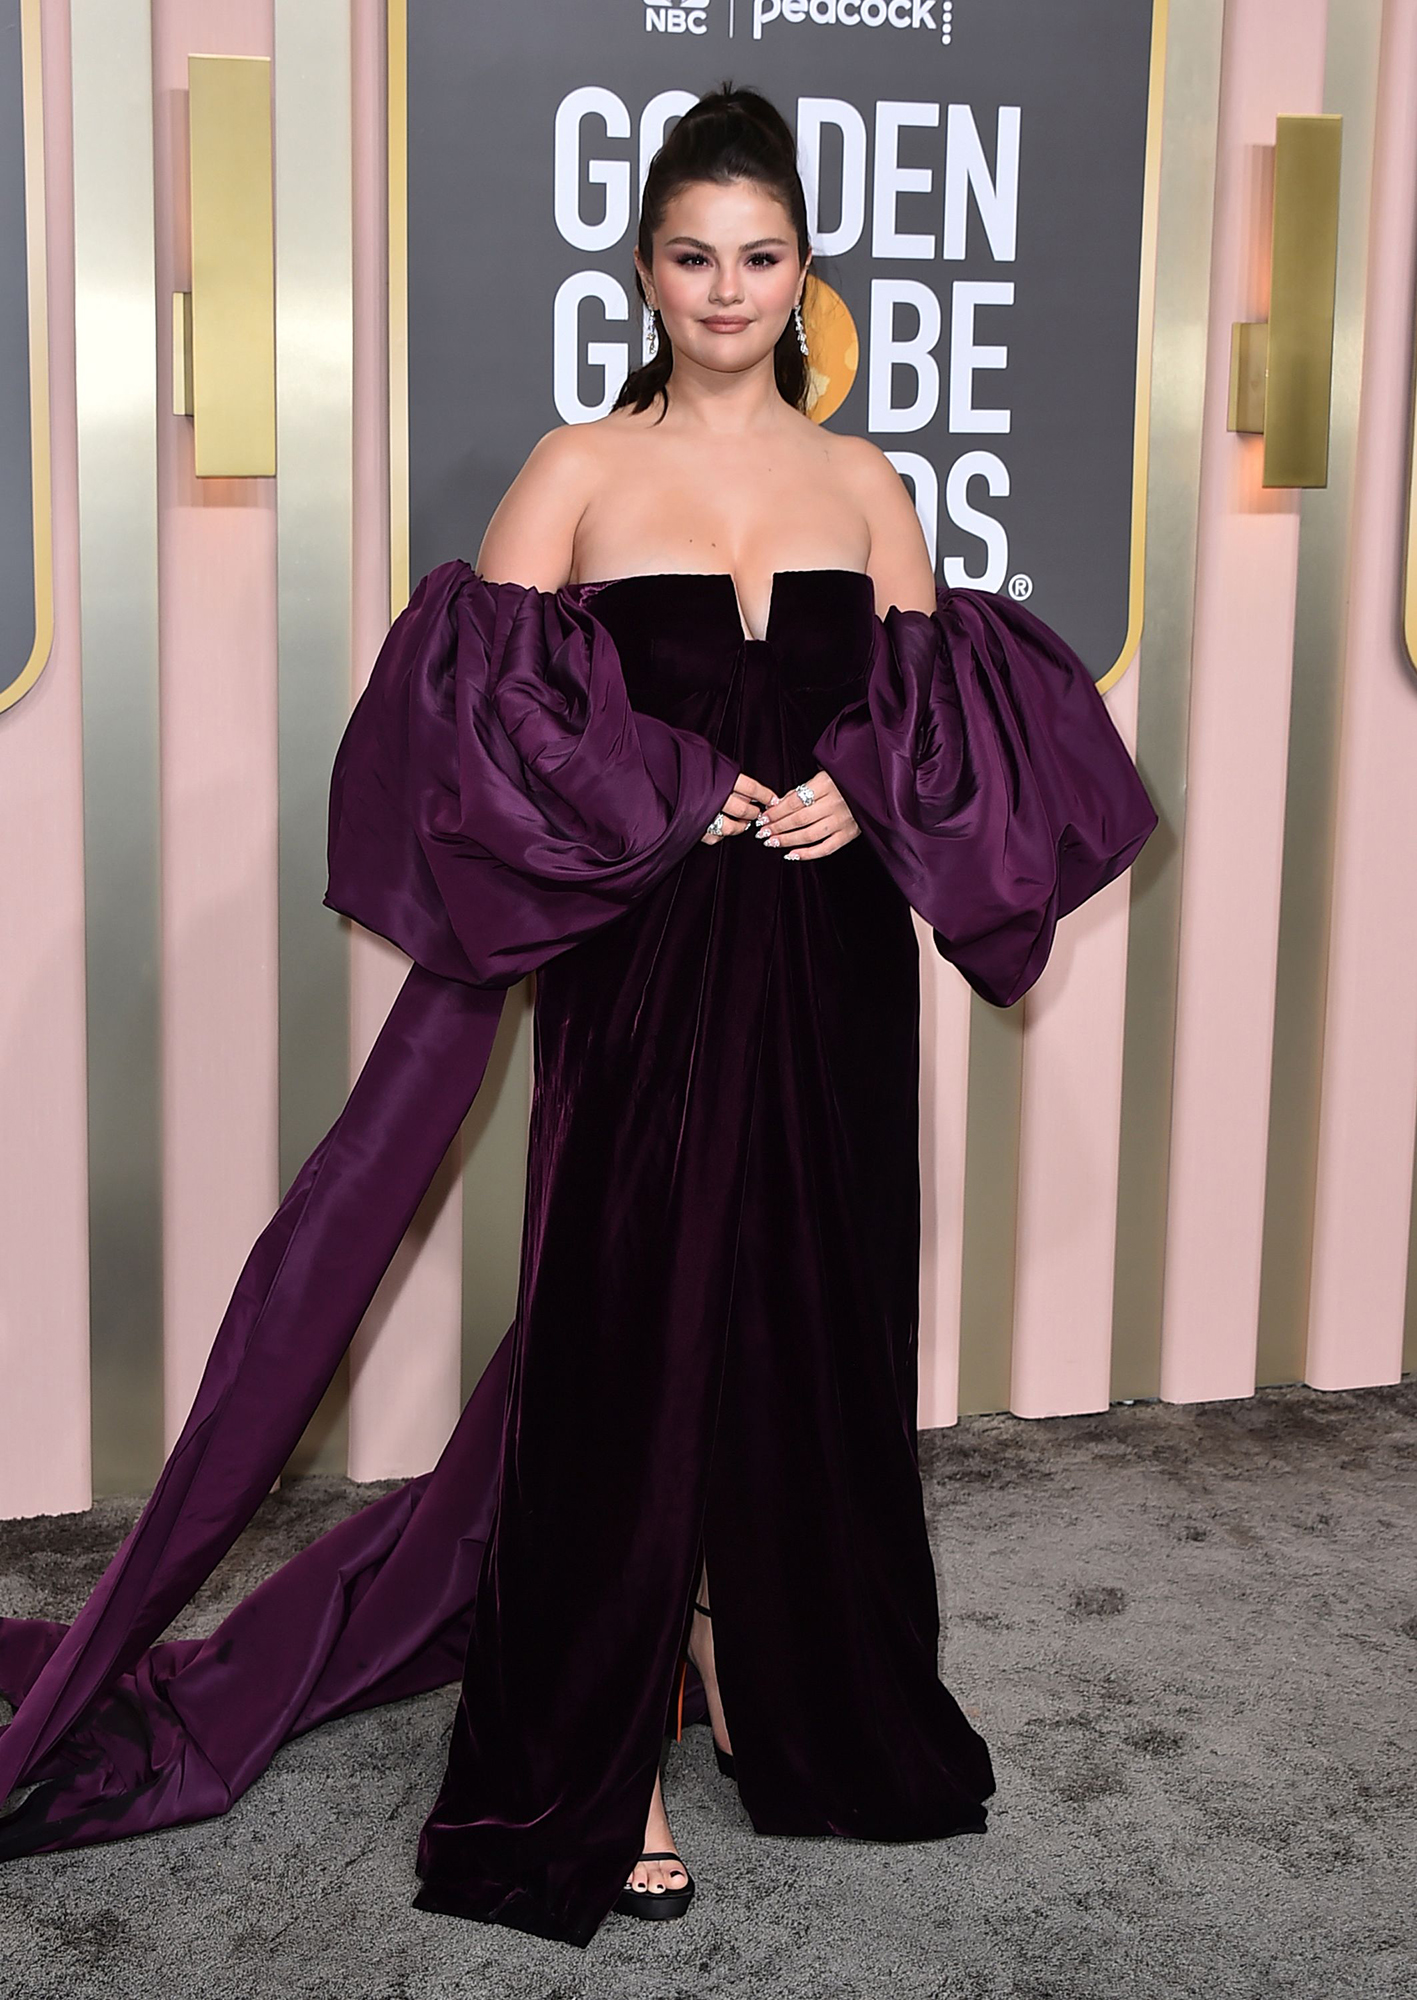 Golden Globes 2023 Red Carpet Fashion: Dresses, Photos